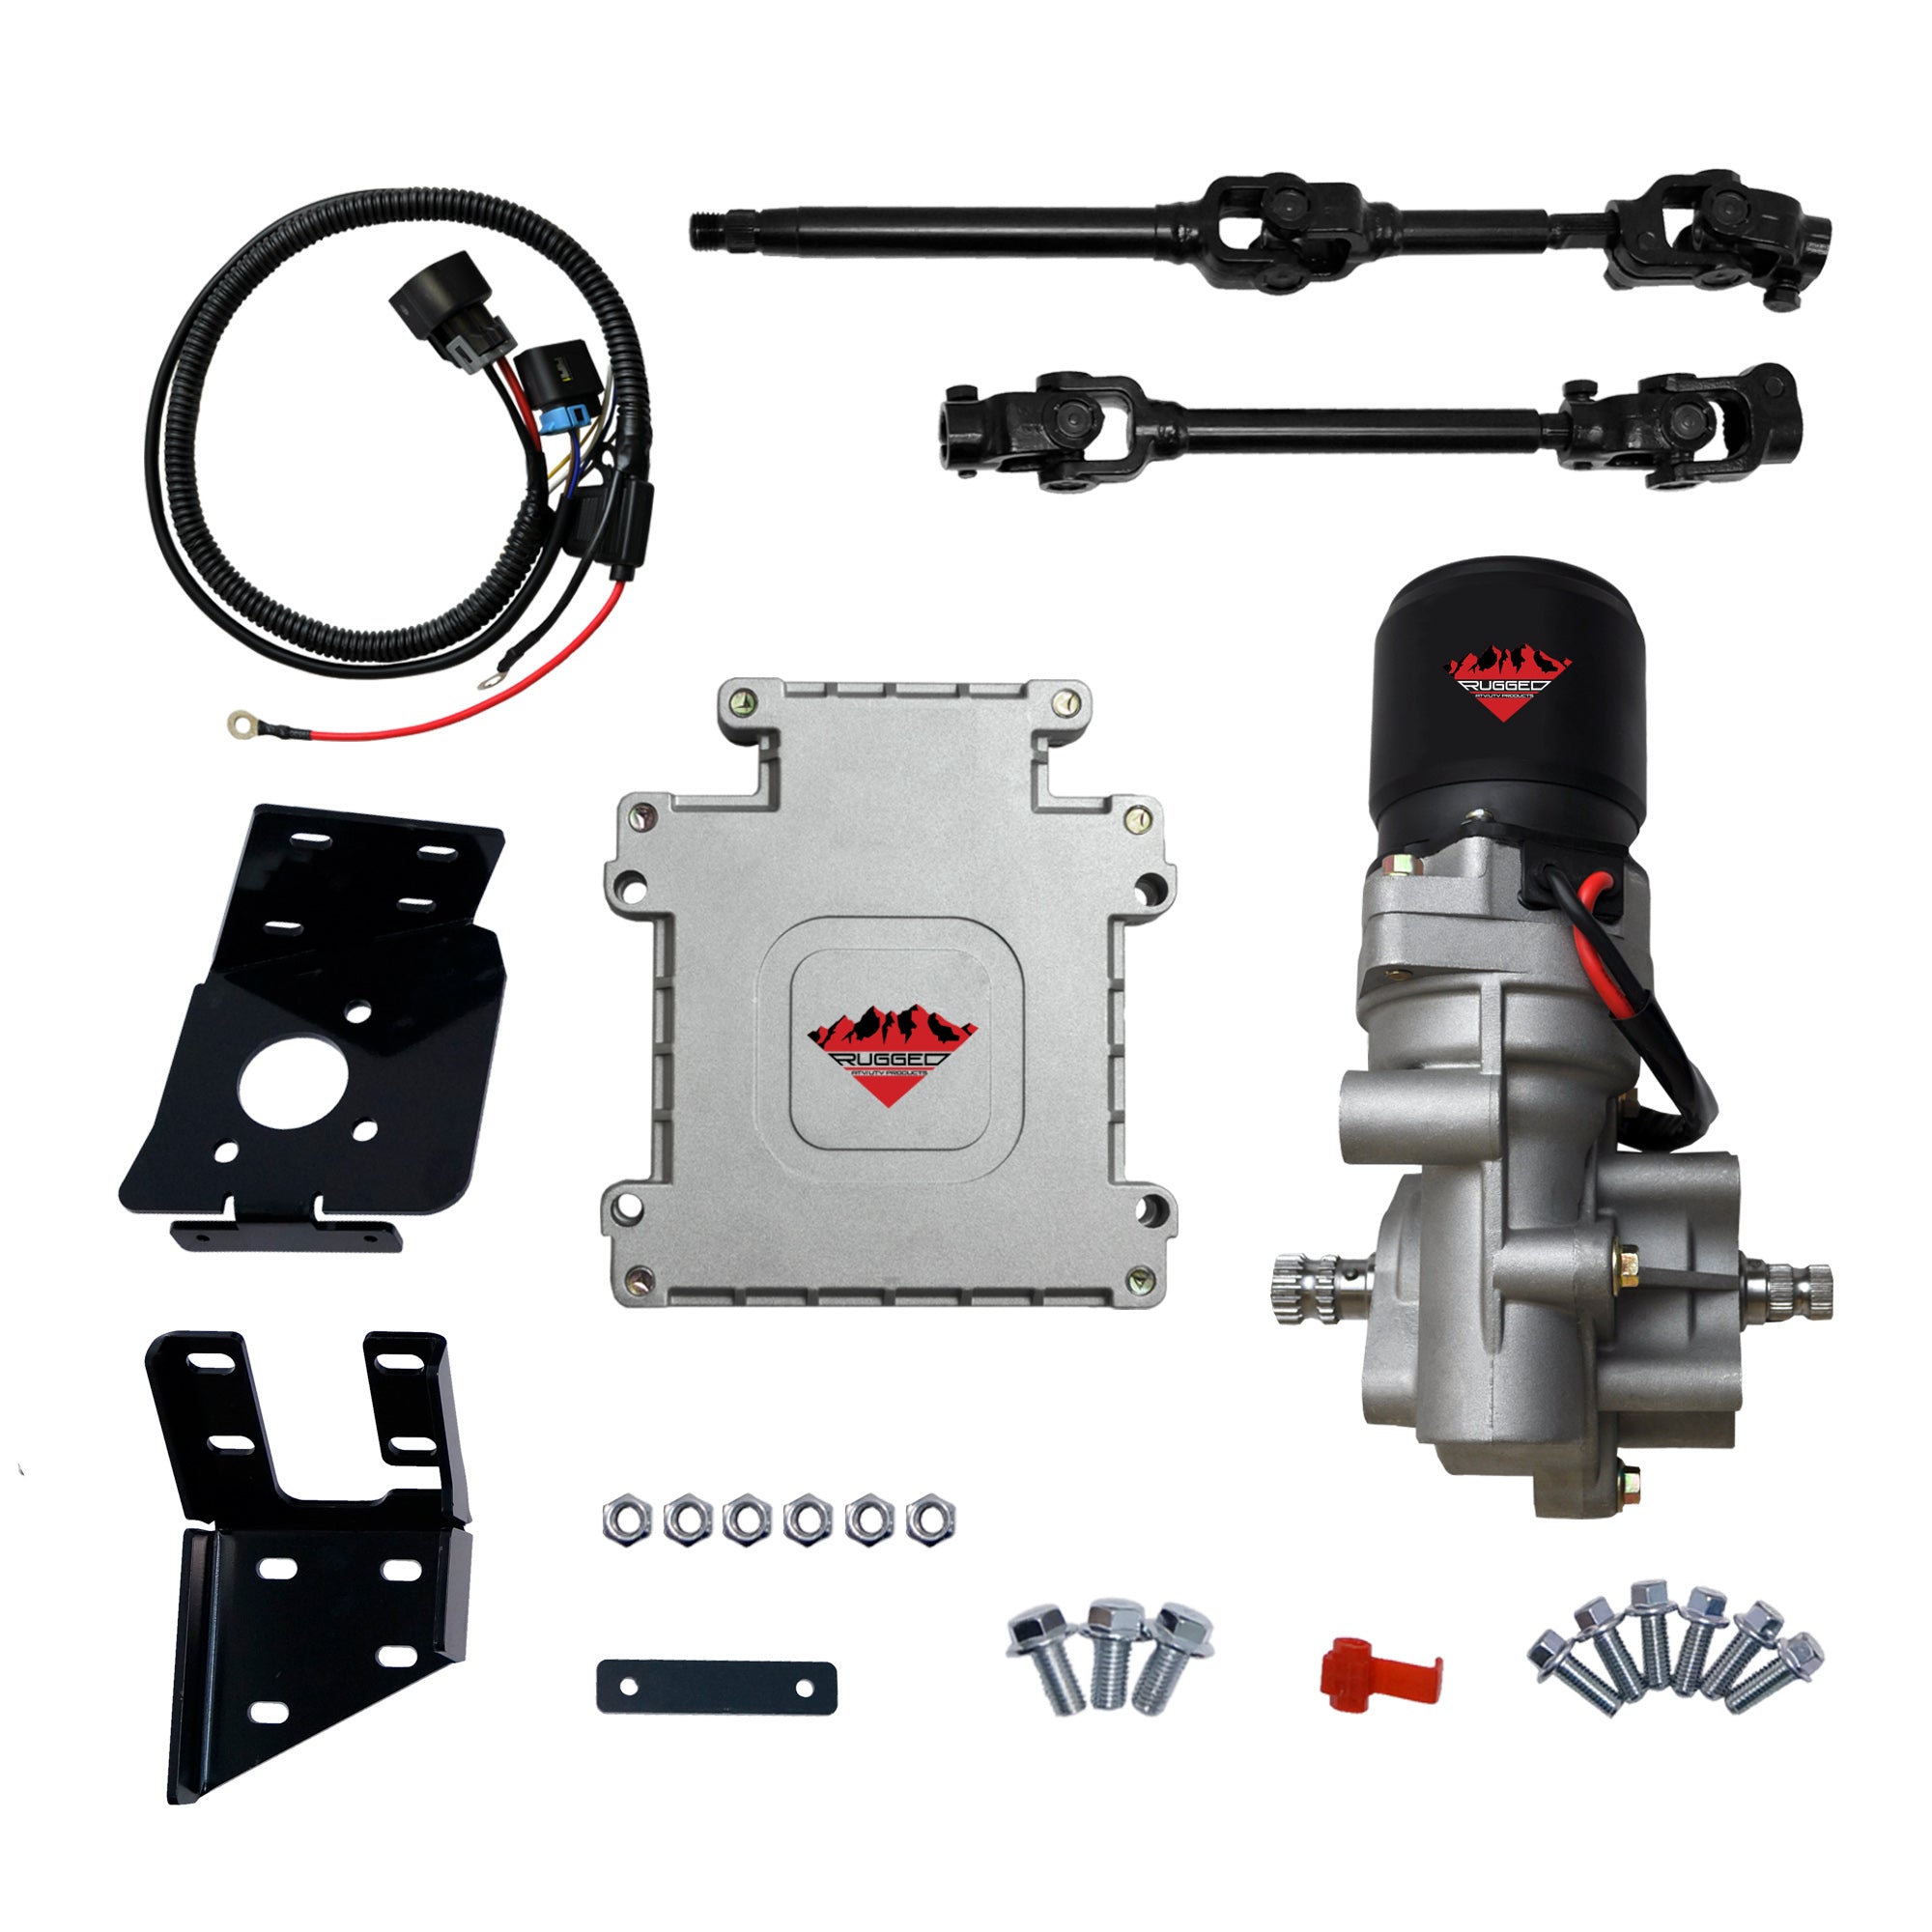 Electric Power Steering Kit for Polaris RZR 1000 